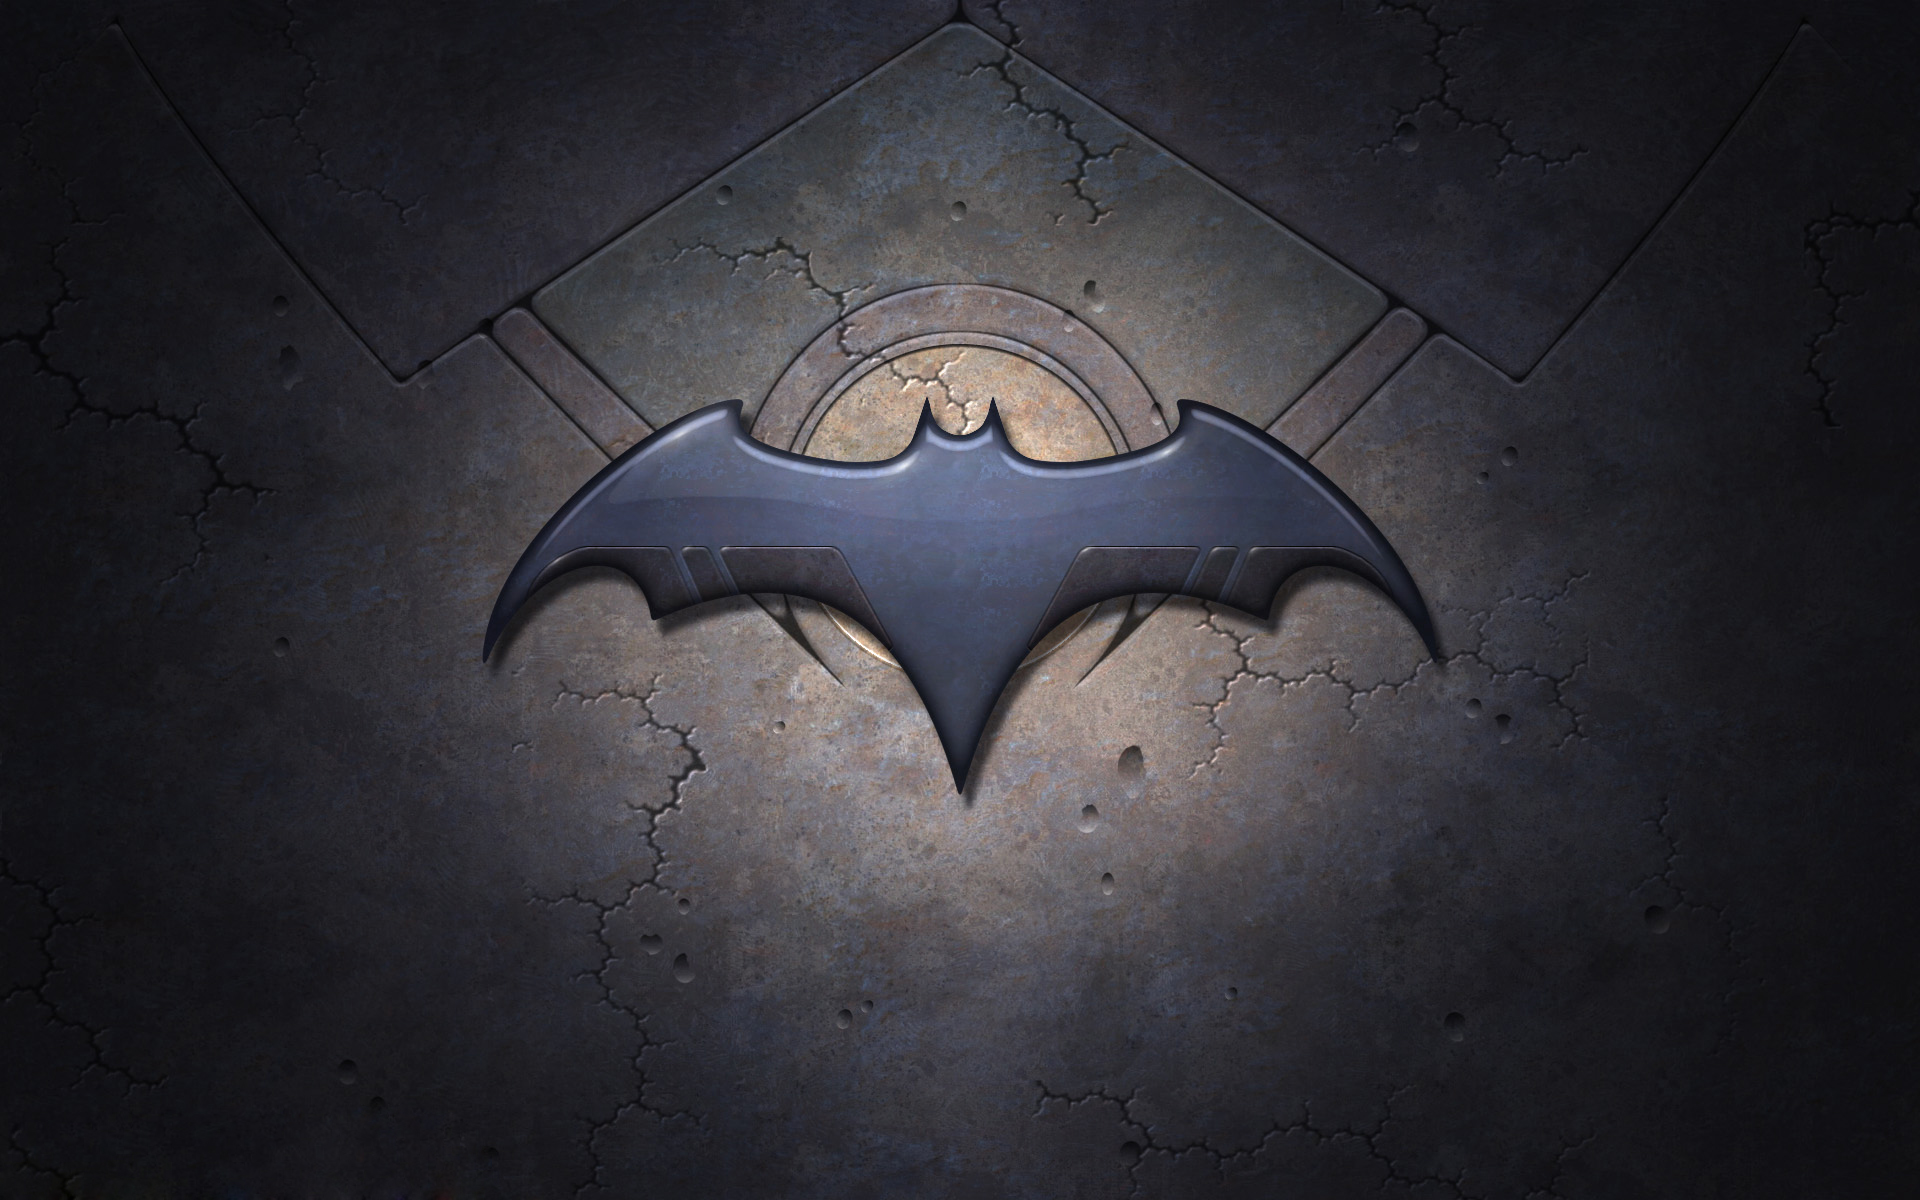 Bat Symbol Wallpapers